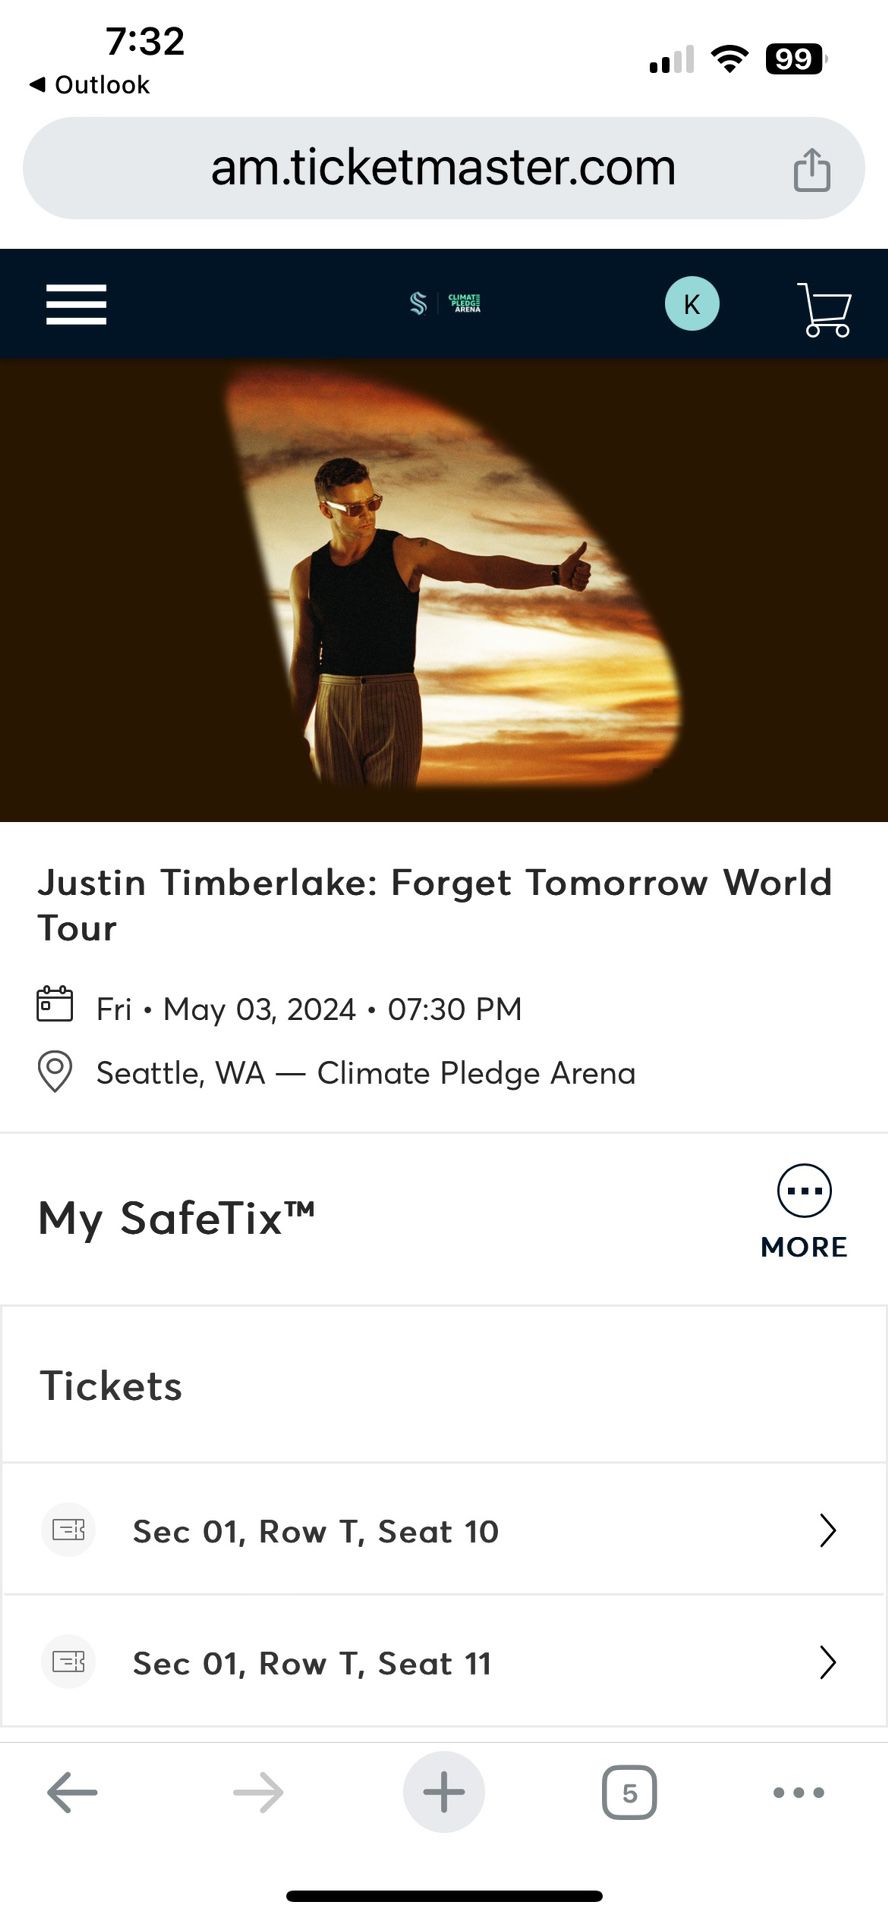 Justin Timberlake Club Seats - $120 each